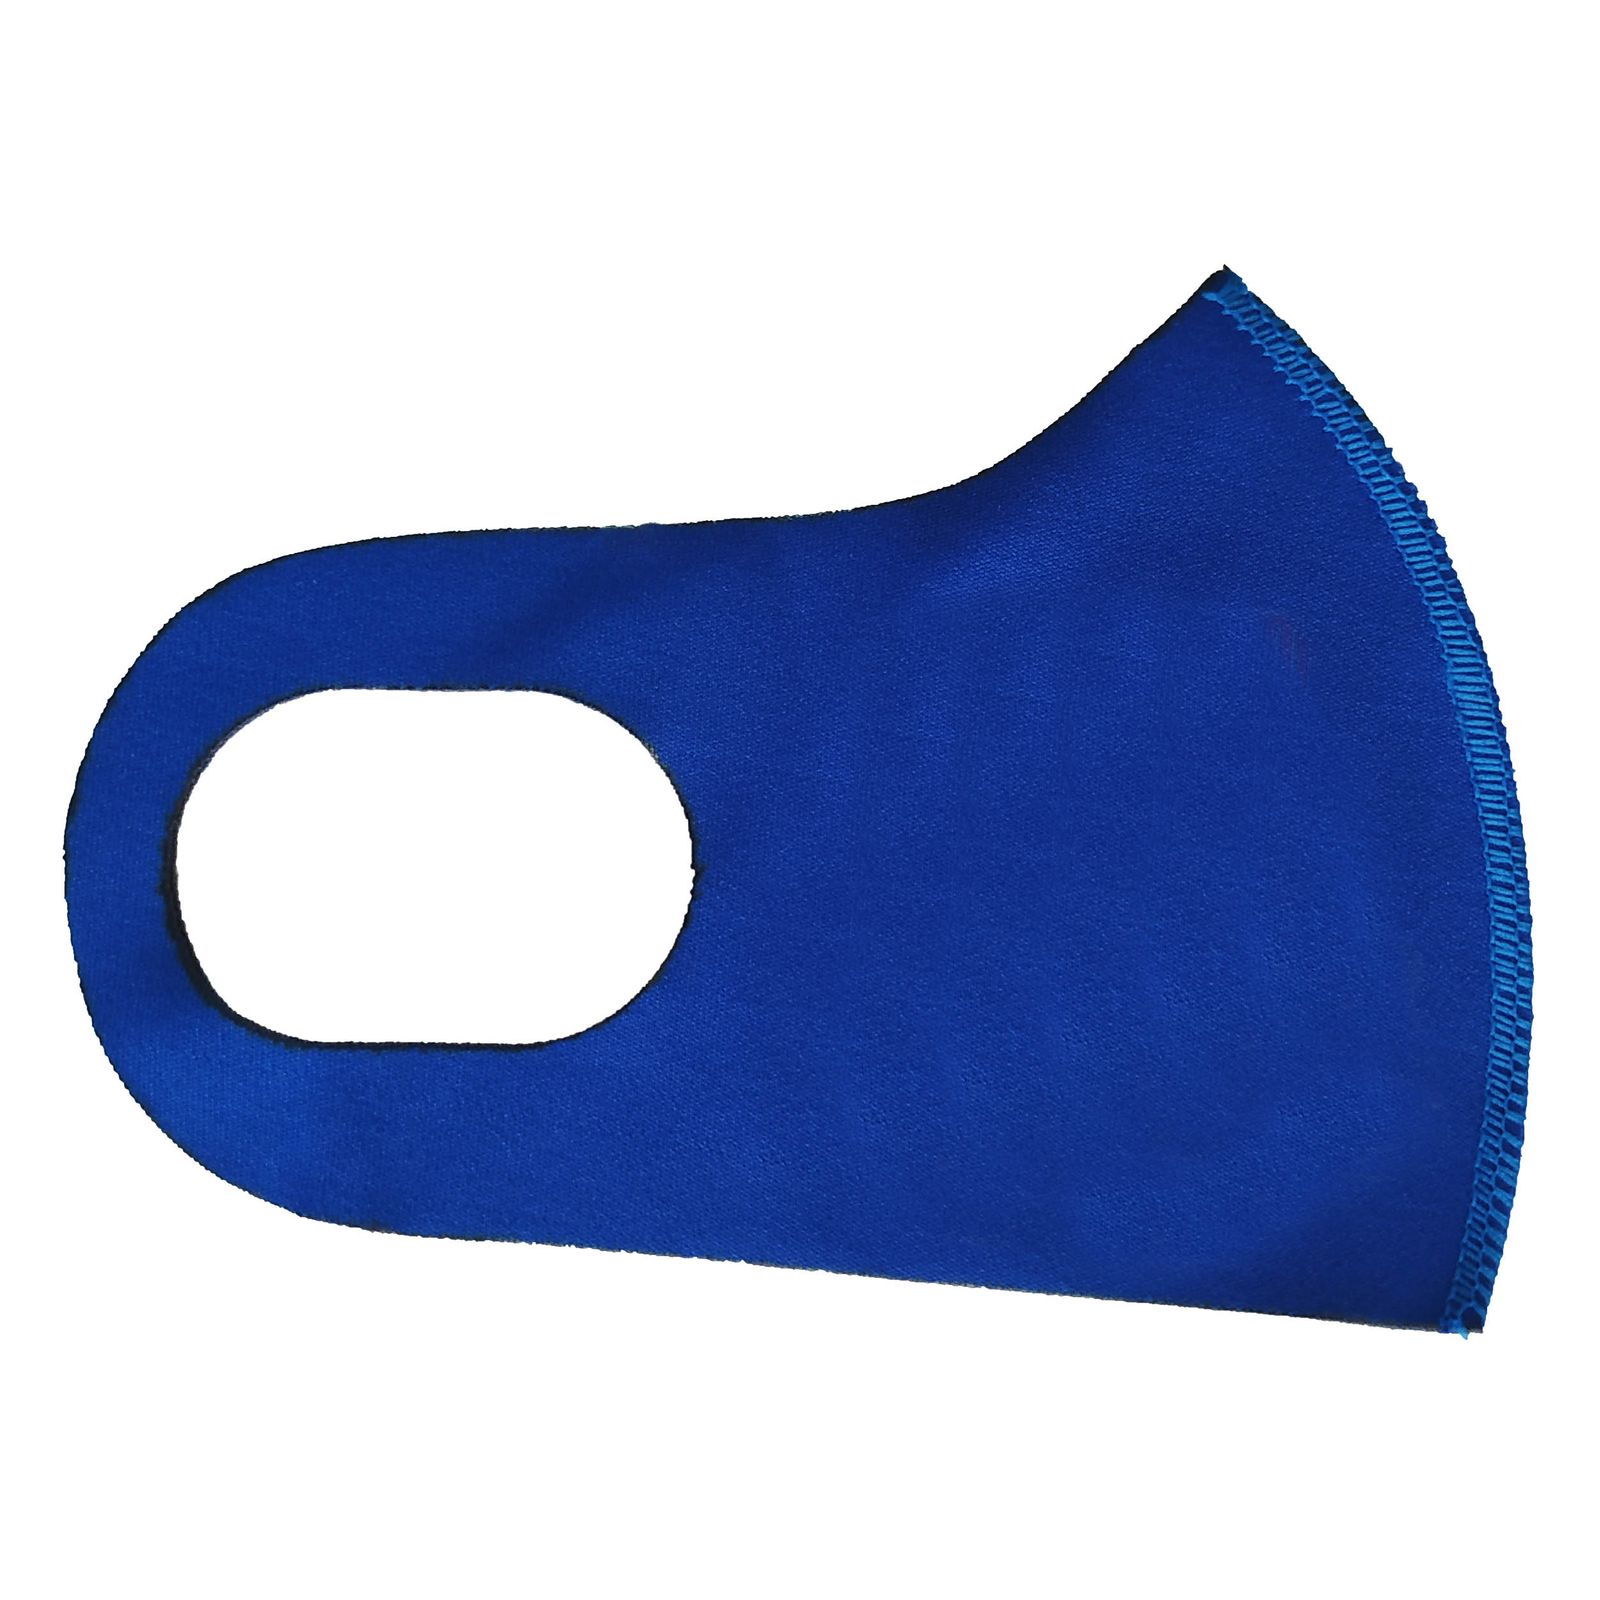 ماسک تزئینی صورت بچگانه طرح DESPICABLE کد 30681 رنگ آبی -  - 2